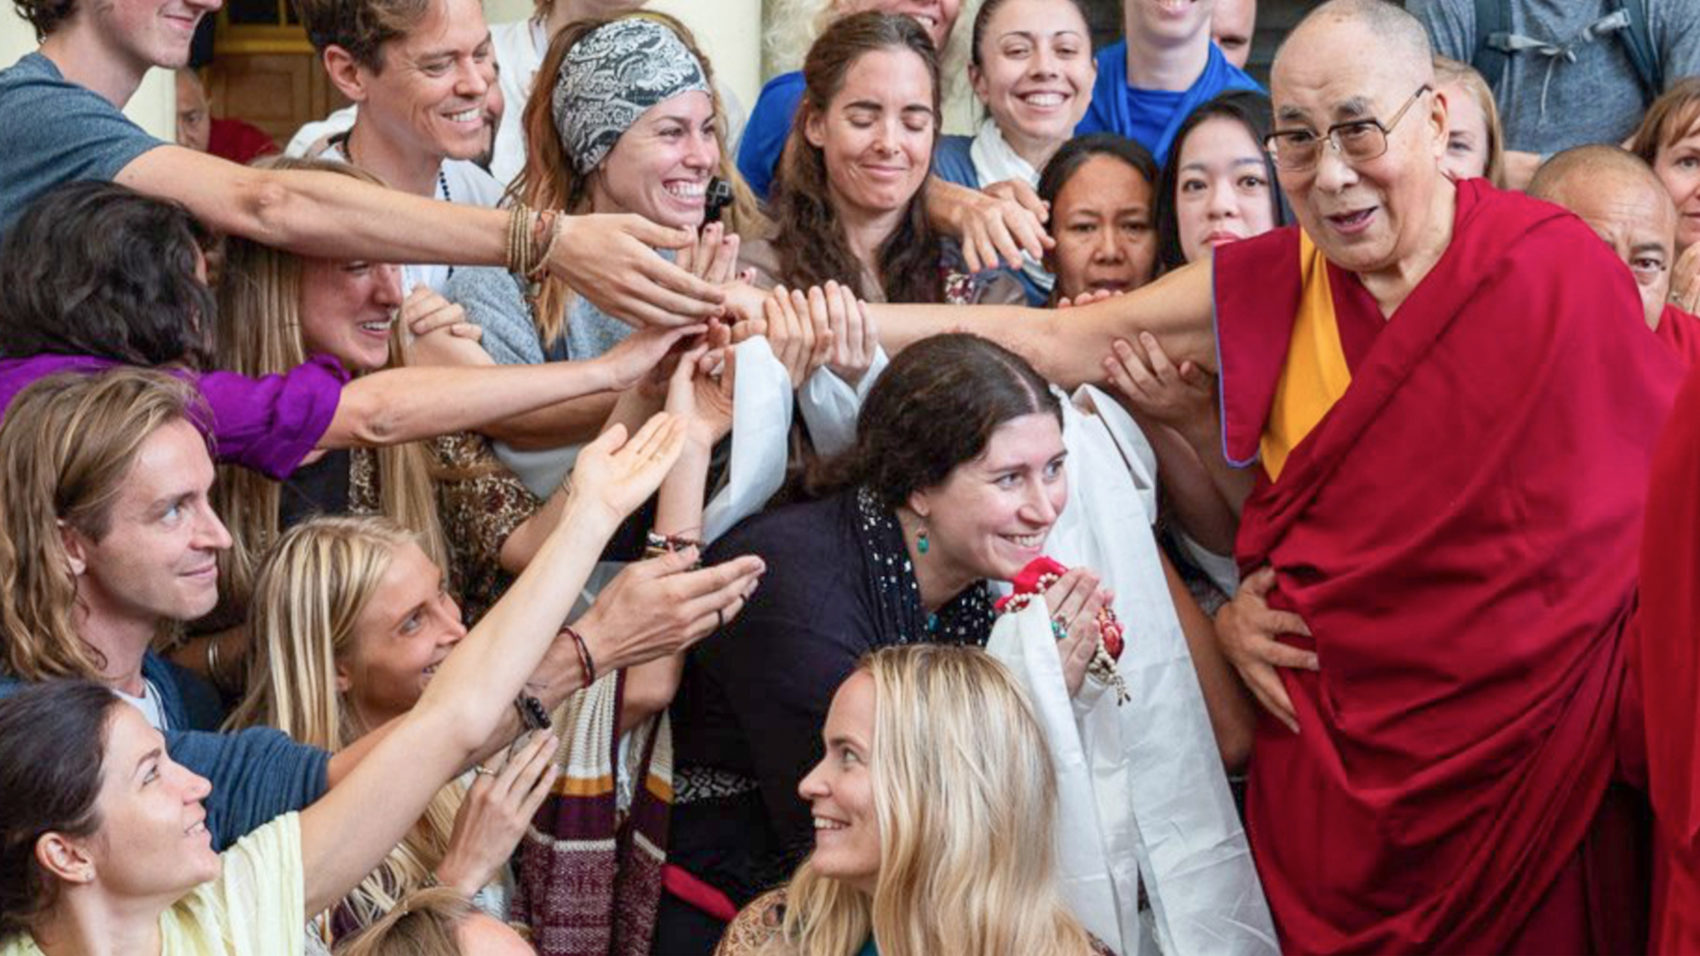 Meeting The Dalai Lama In The Himalayan Mountains